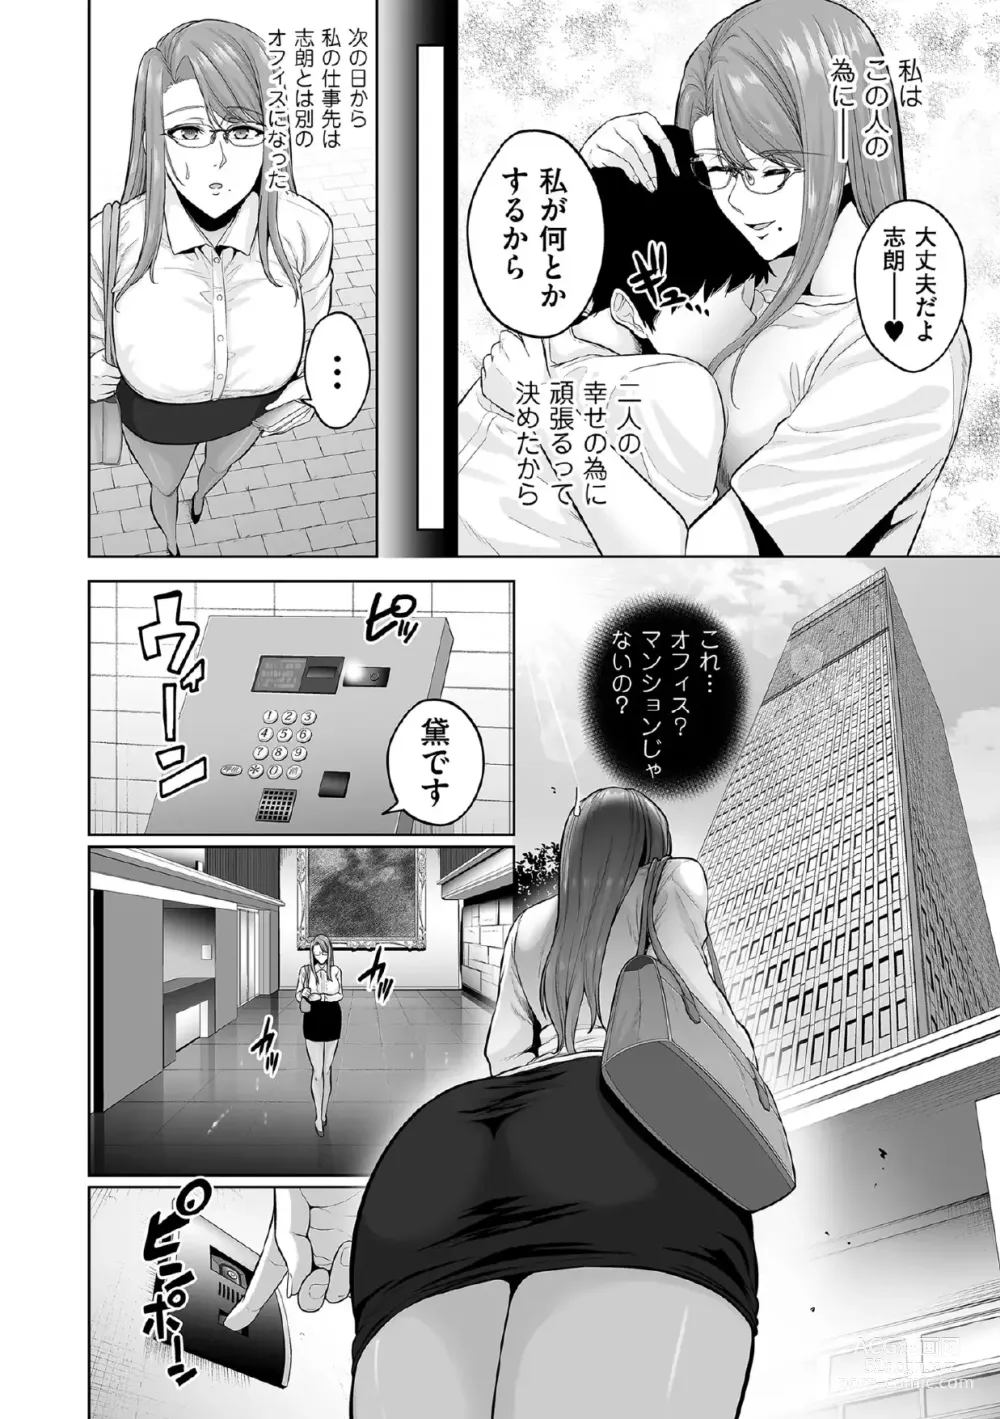 Page 8 of manga 本性 chapter 01-03